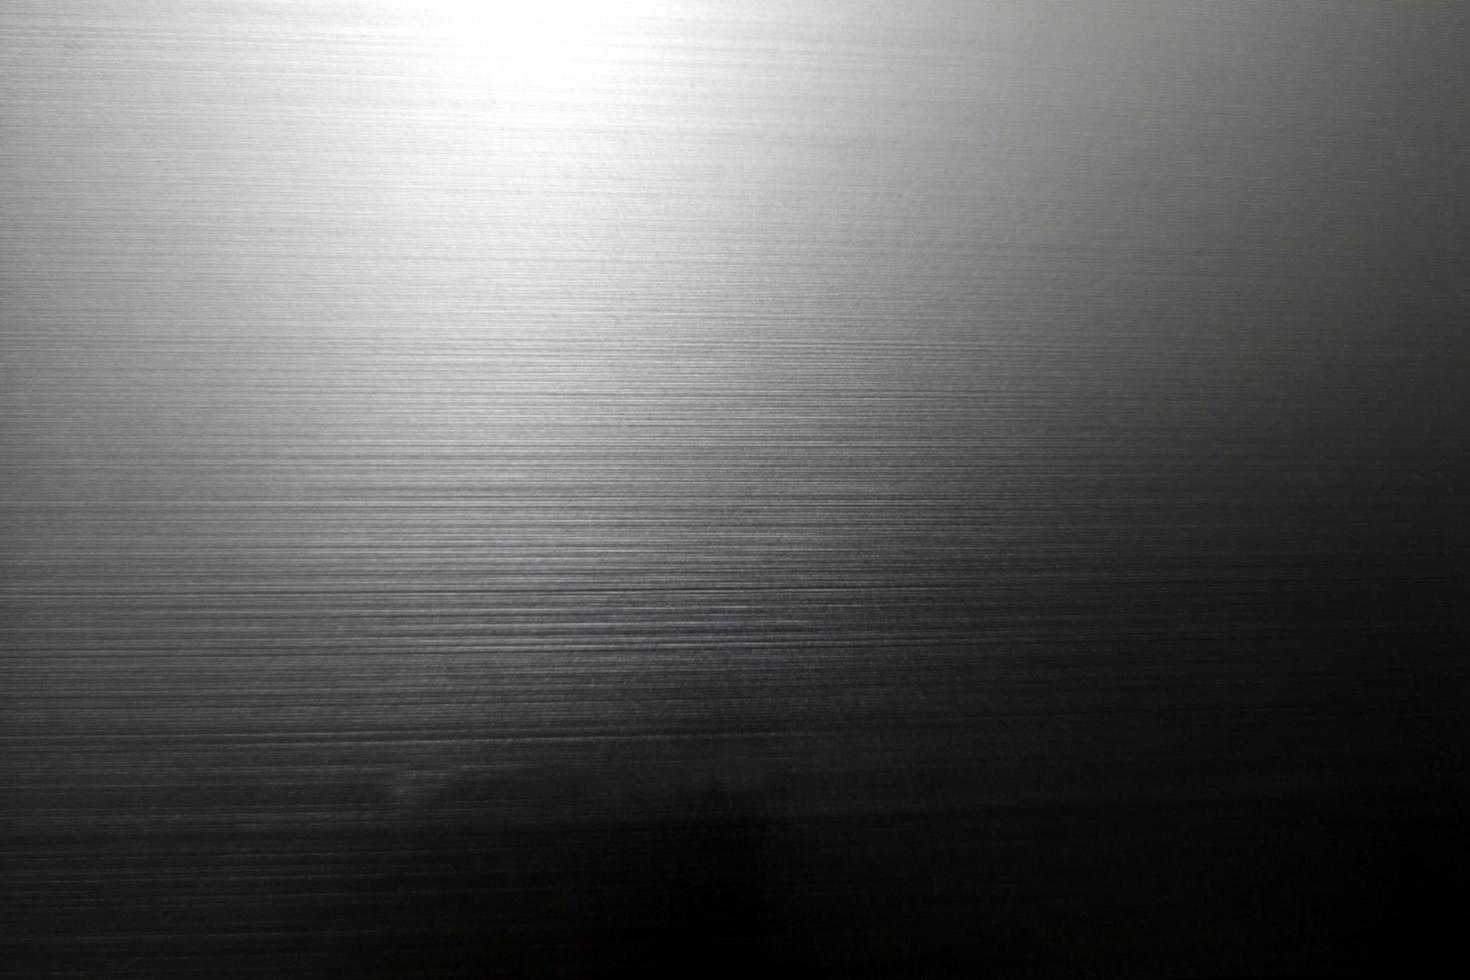 grå svart glansigt papper textur abstrakt bakgrund, tapeter eller bakgrund konst. tomt omslagspapper, affisch, blank kartong för dekorativt designelement, rostfritt stål slät yta design foto